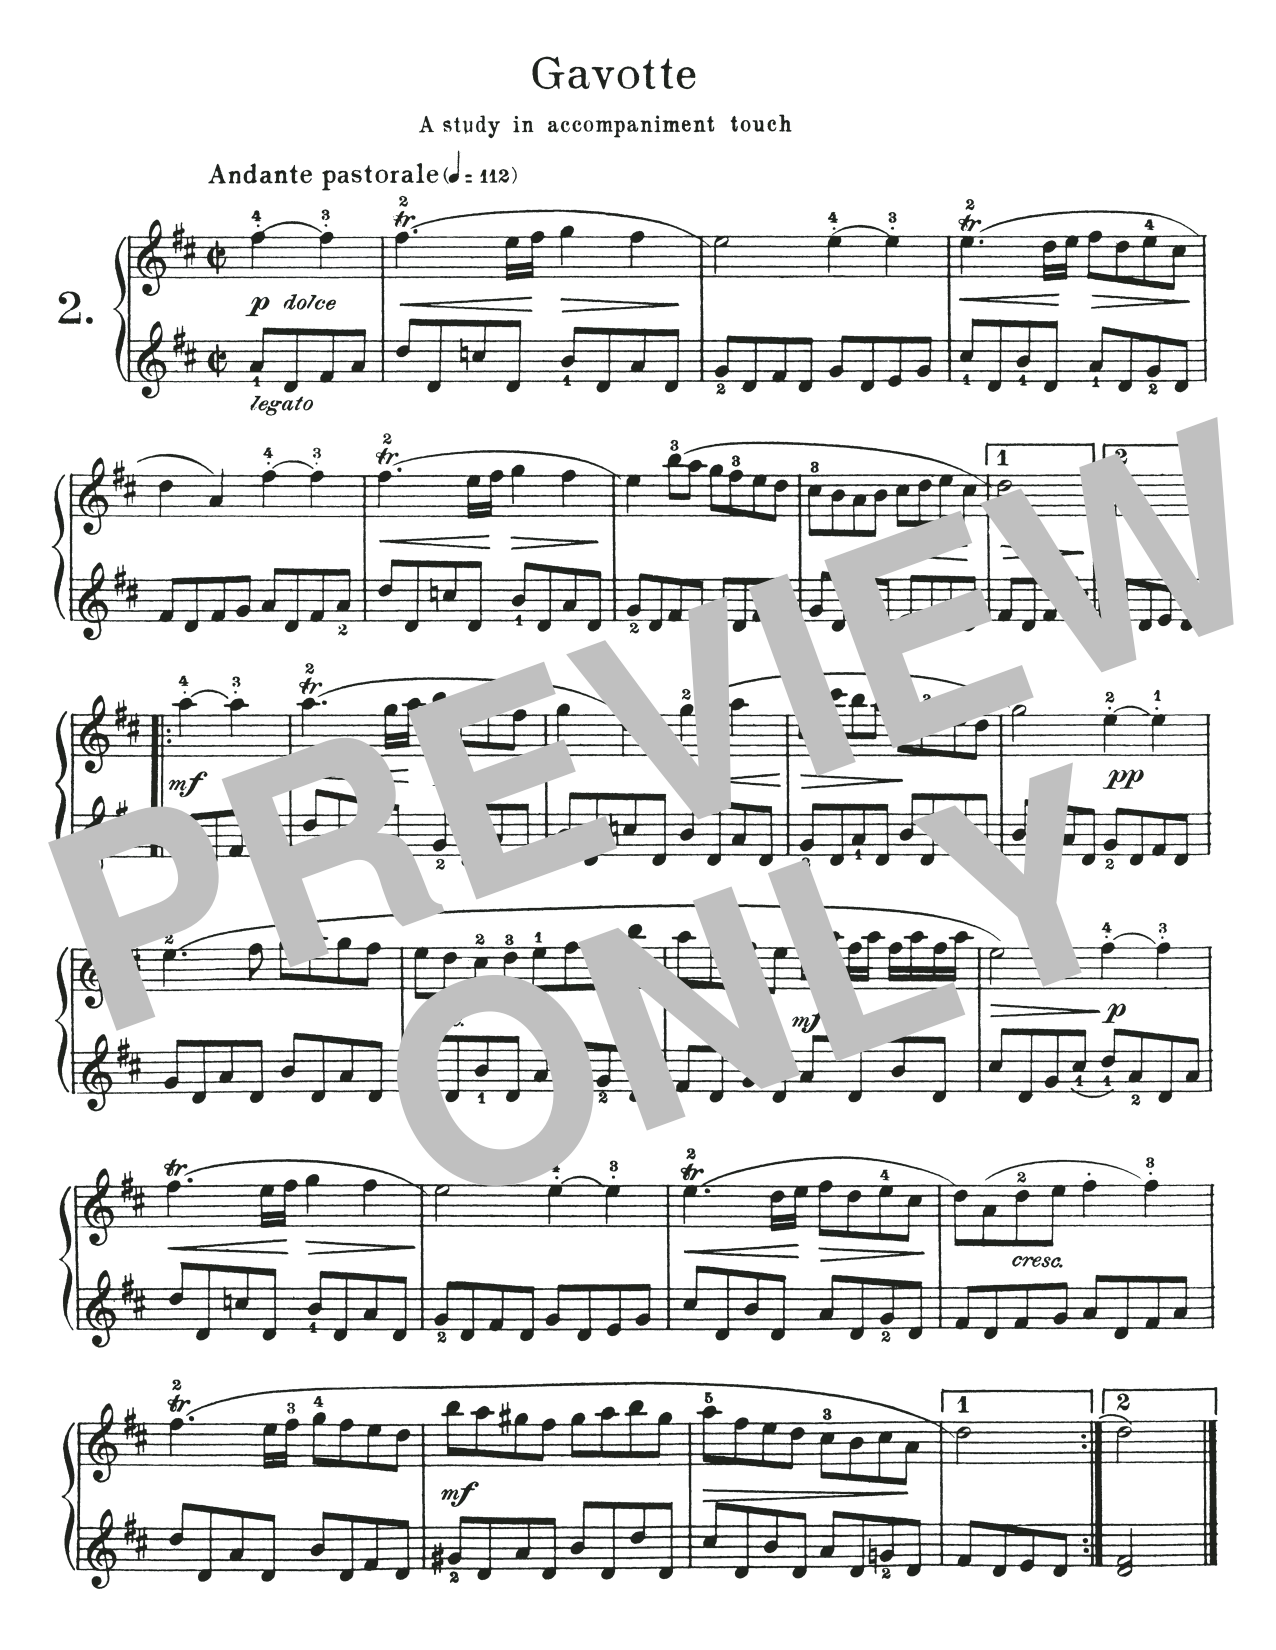 Download Johann Sebastian Bach Gavotte II In D Major, BWV 811 Sheet Music